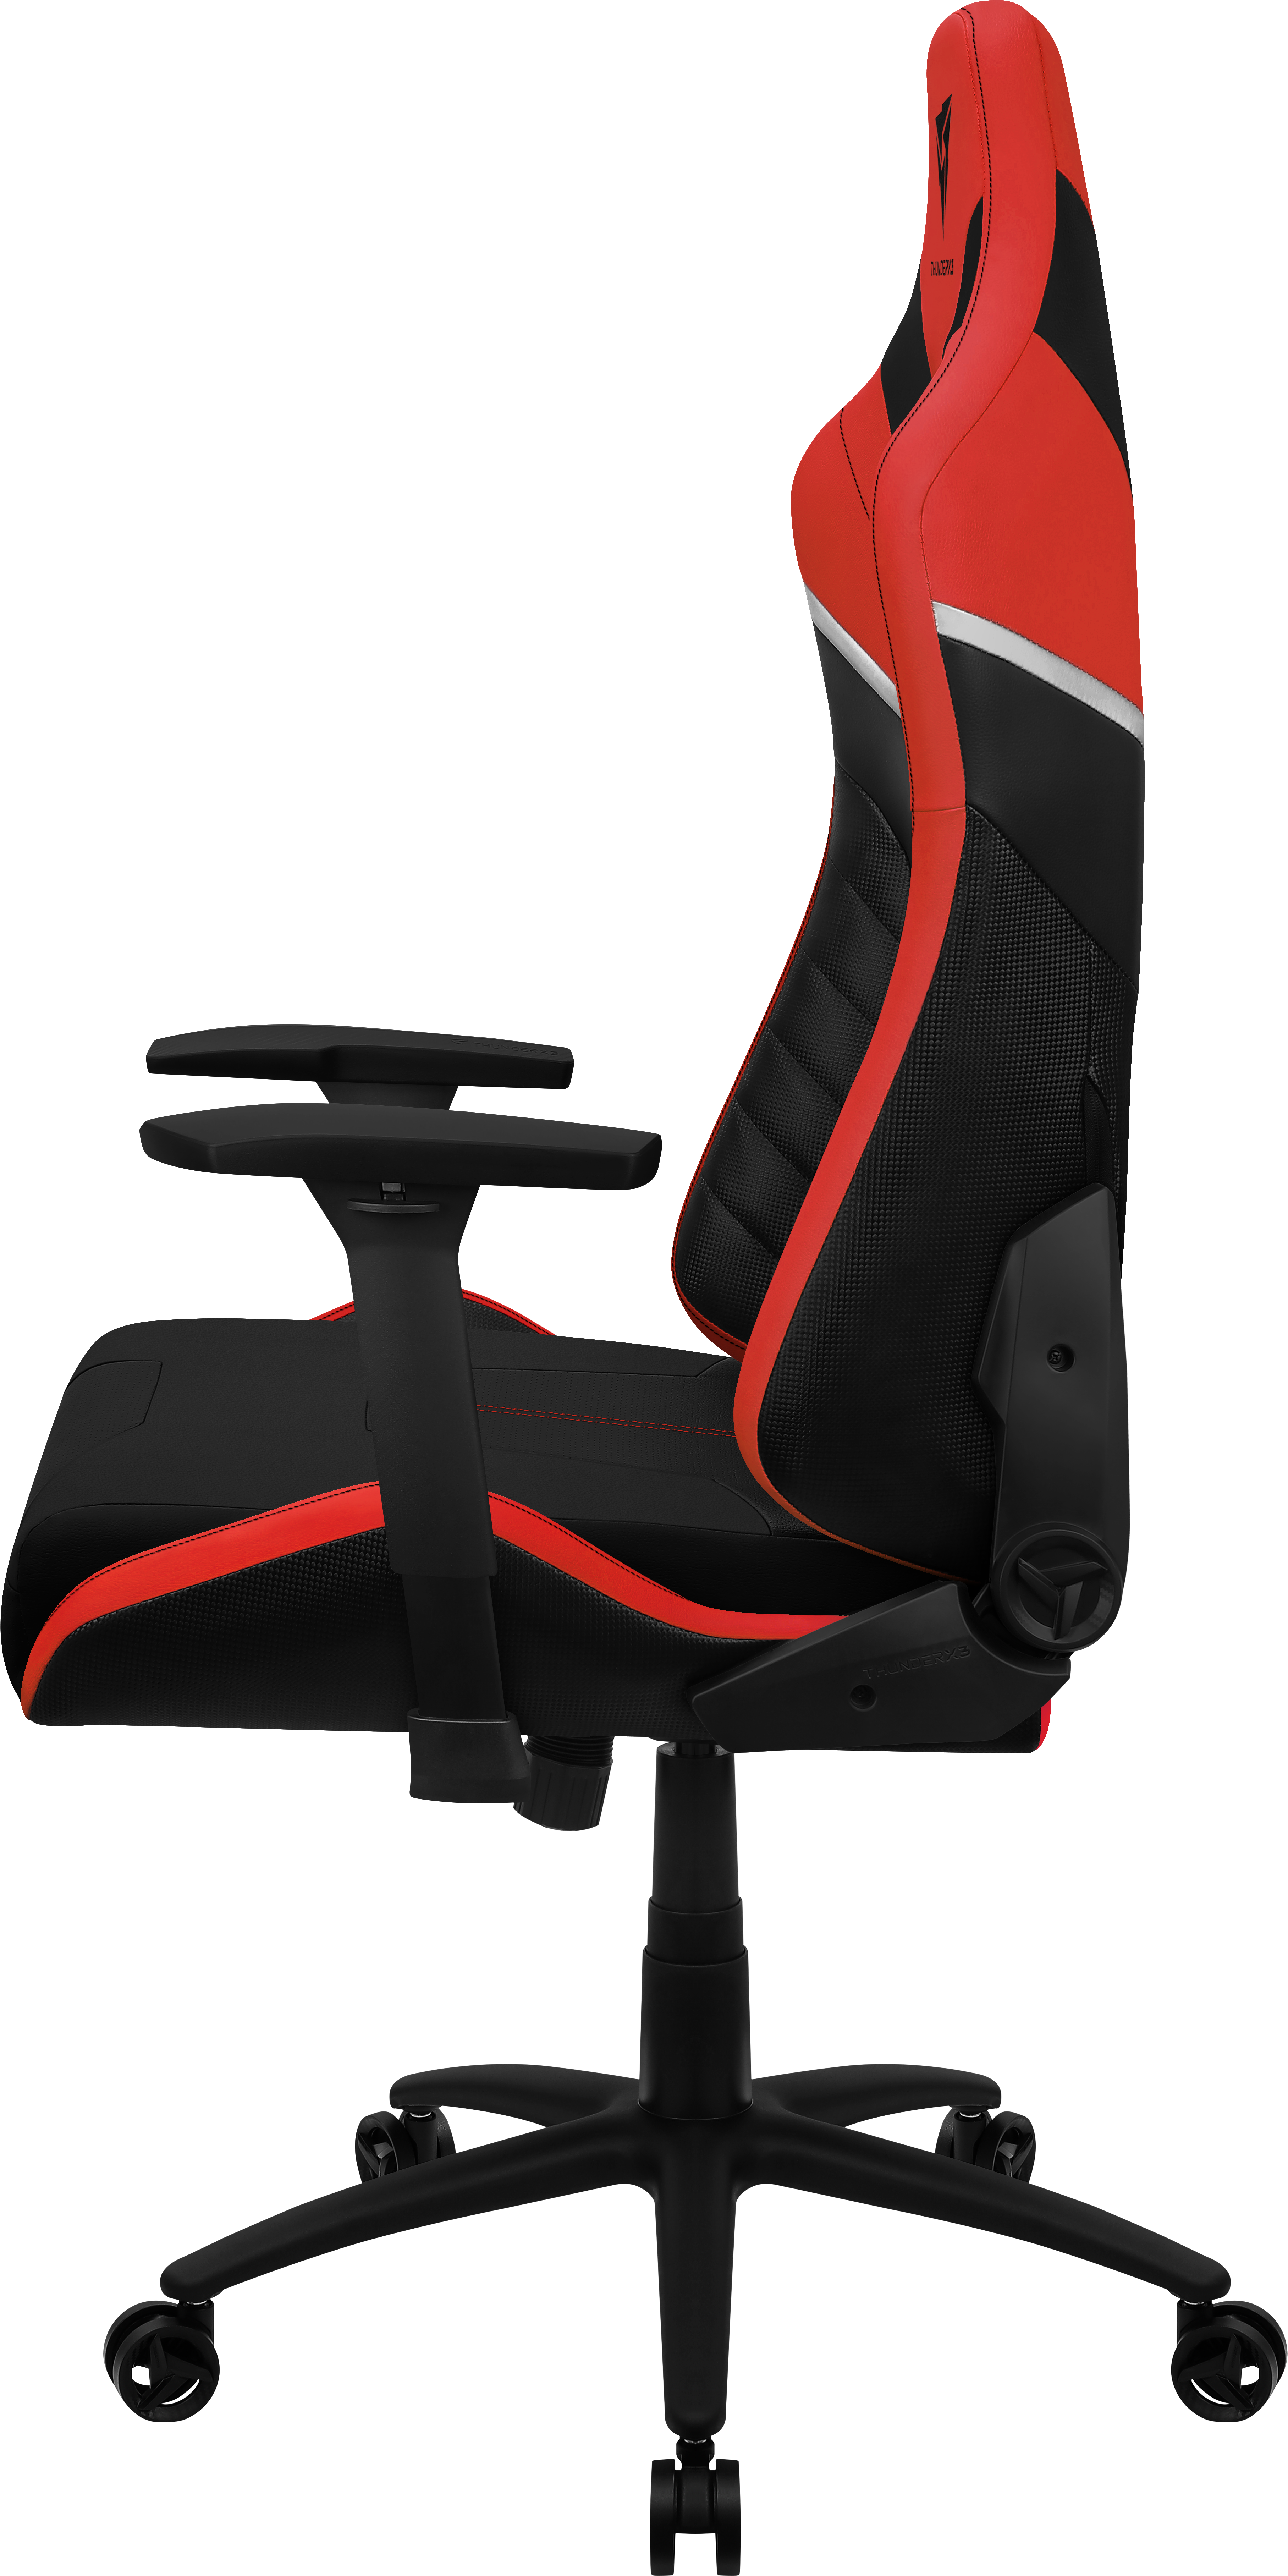 ThunderX3 - ThunderX3 TC5 MAX Gaming Chair - Ember Red